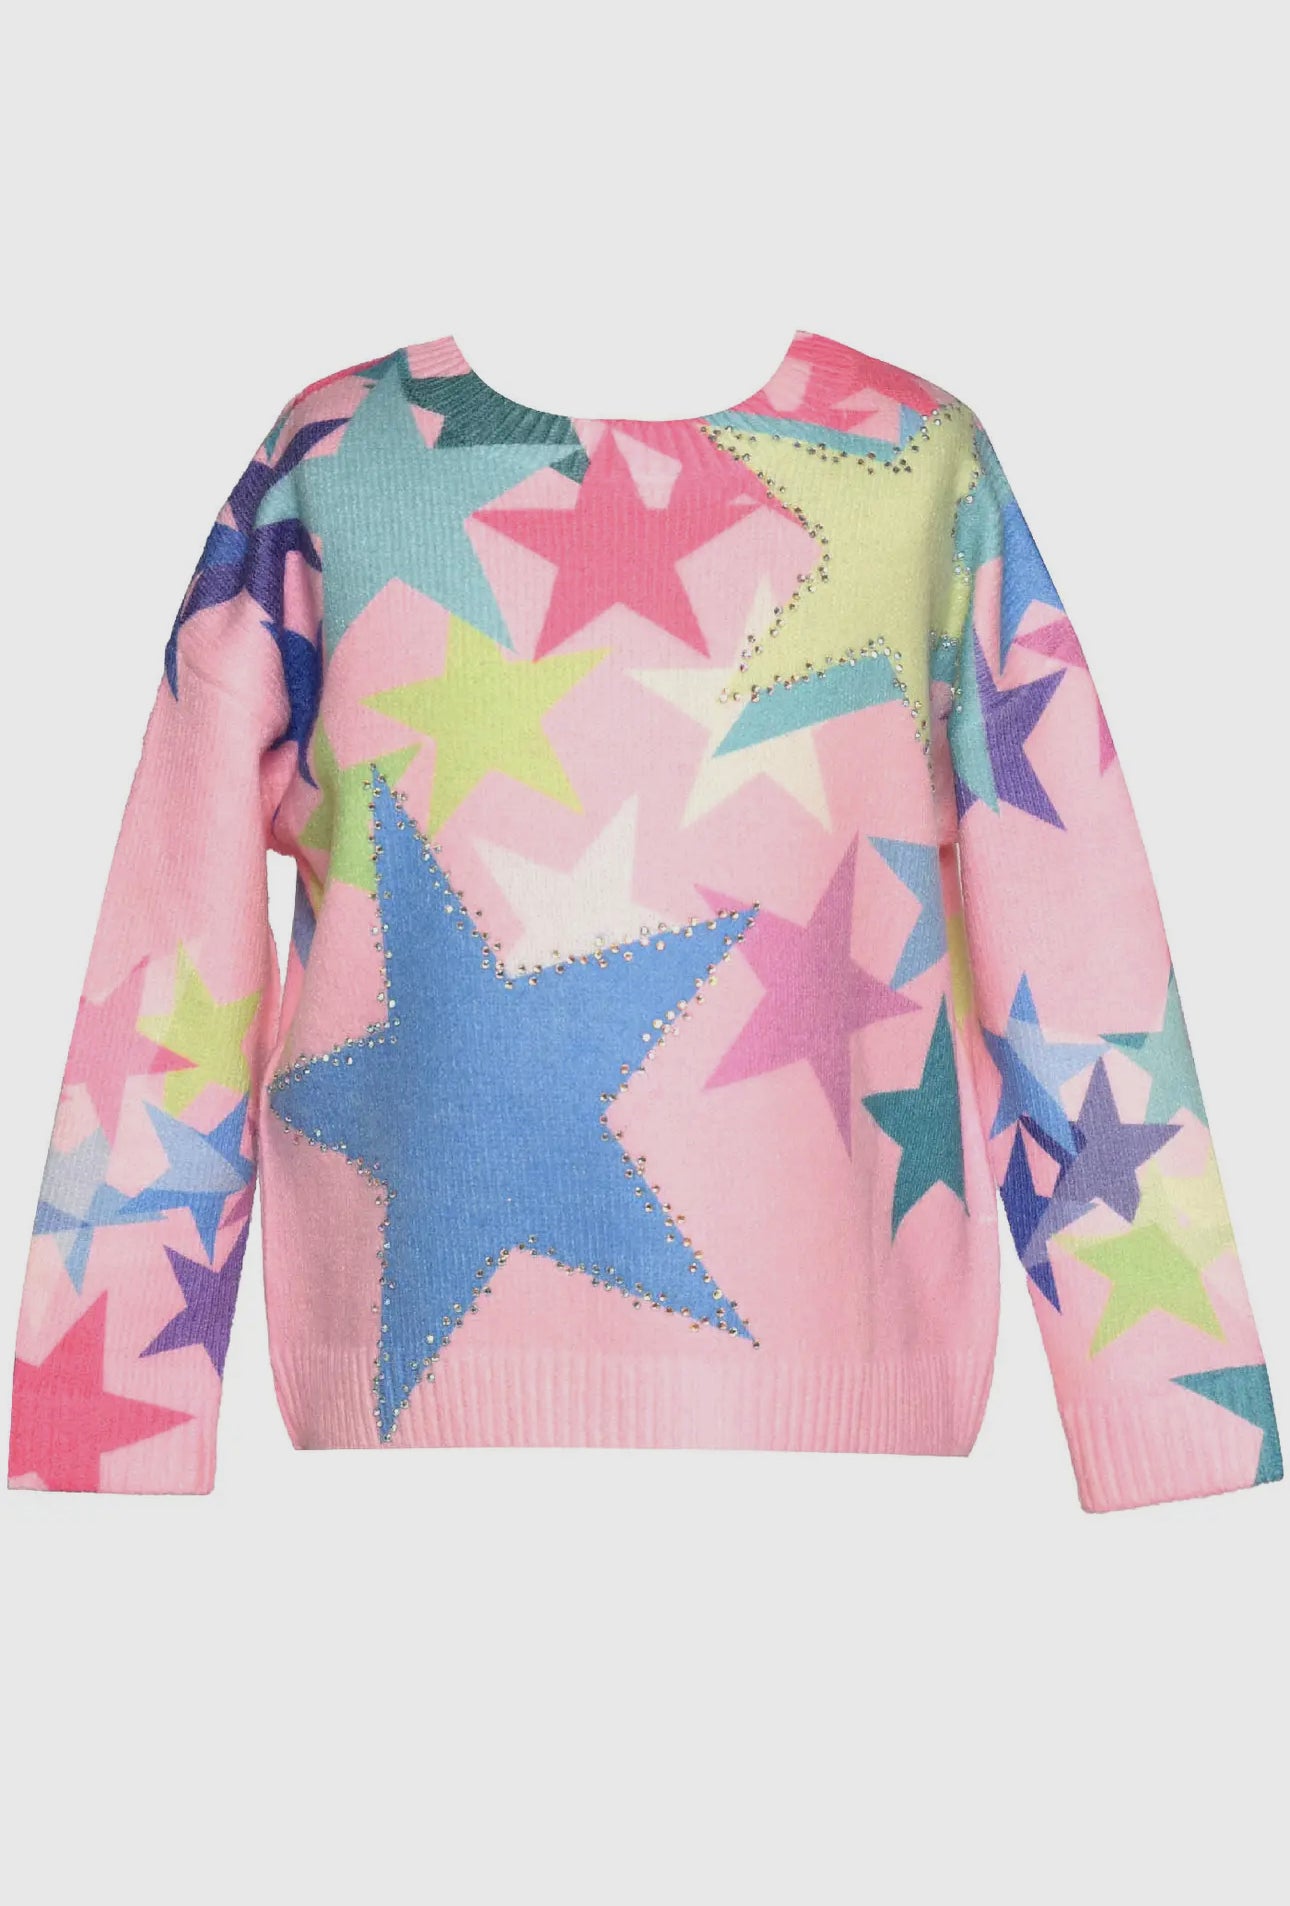 Tween Pink Multi Rhinestone Star Sweater